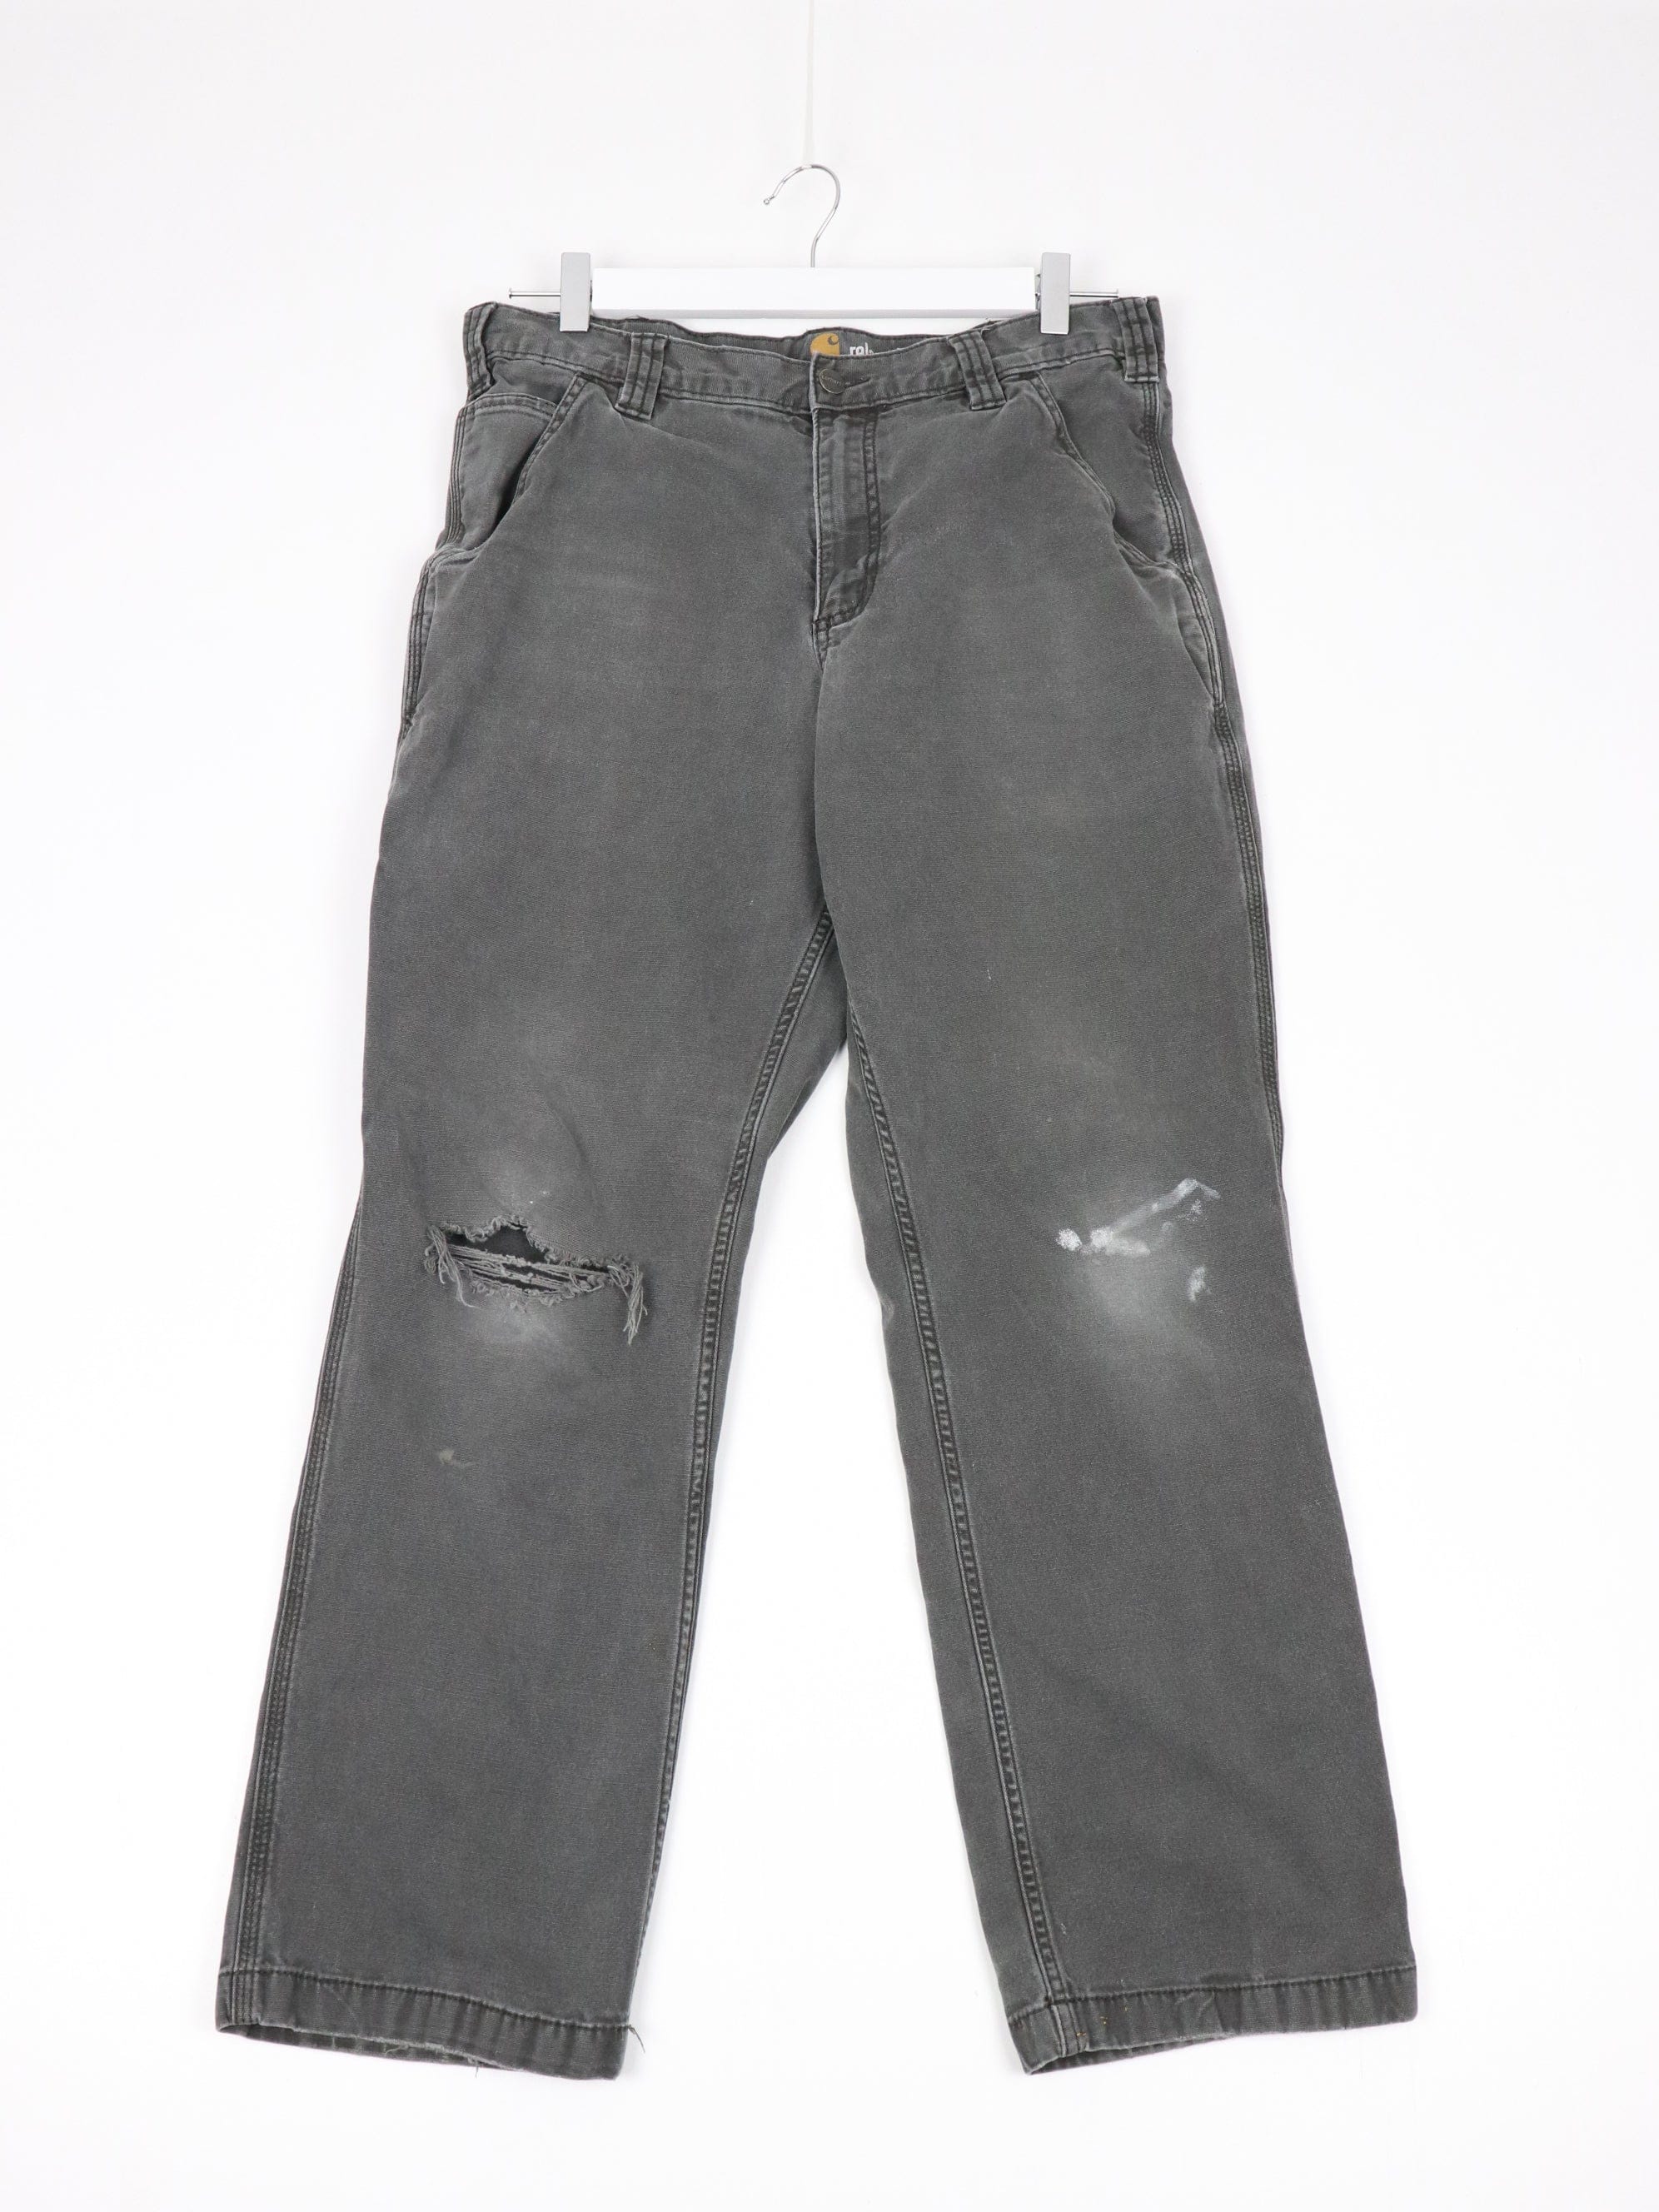 Carhartt Pants Fits Mens 32 x 28 Grey Work Wear Carpenters